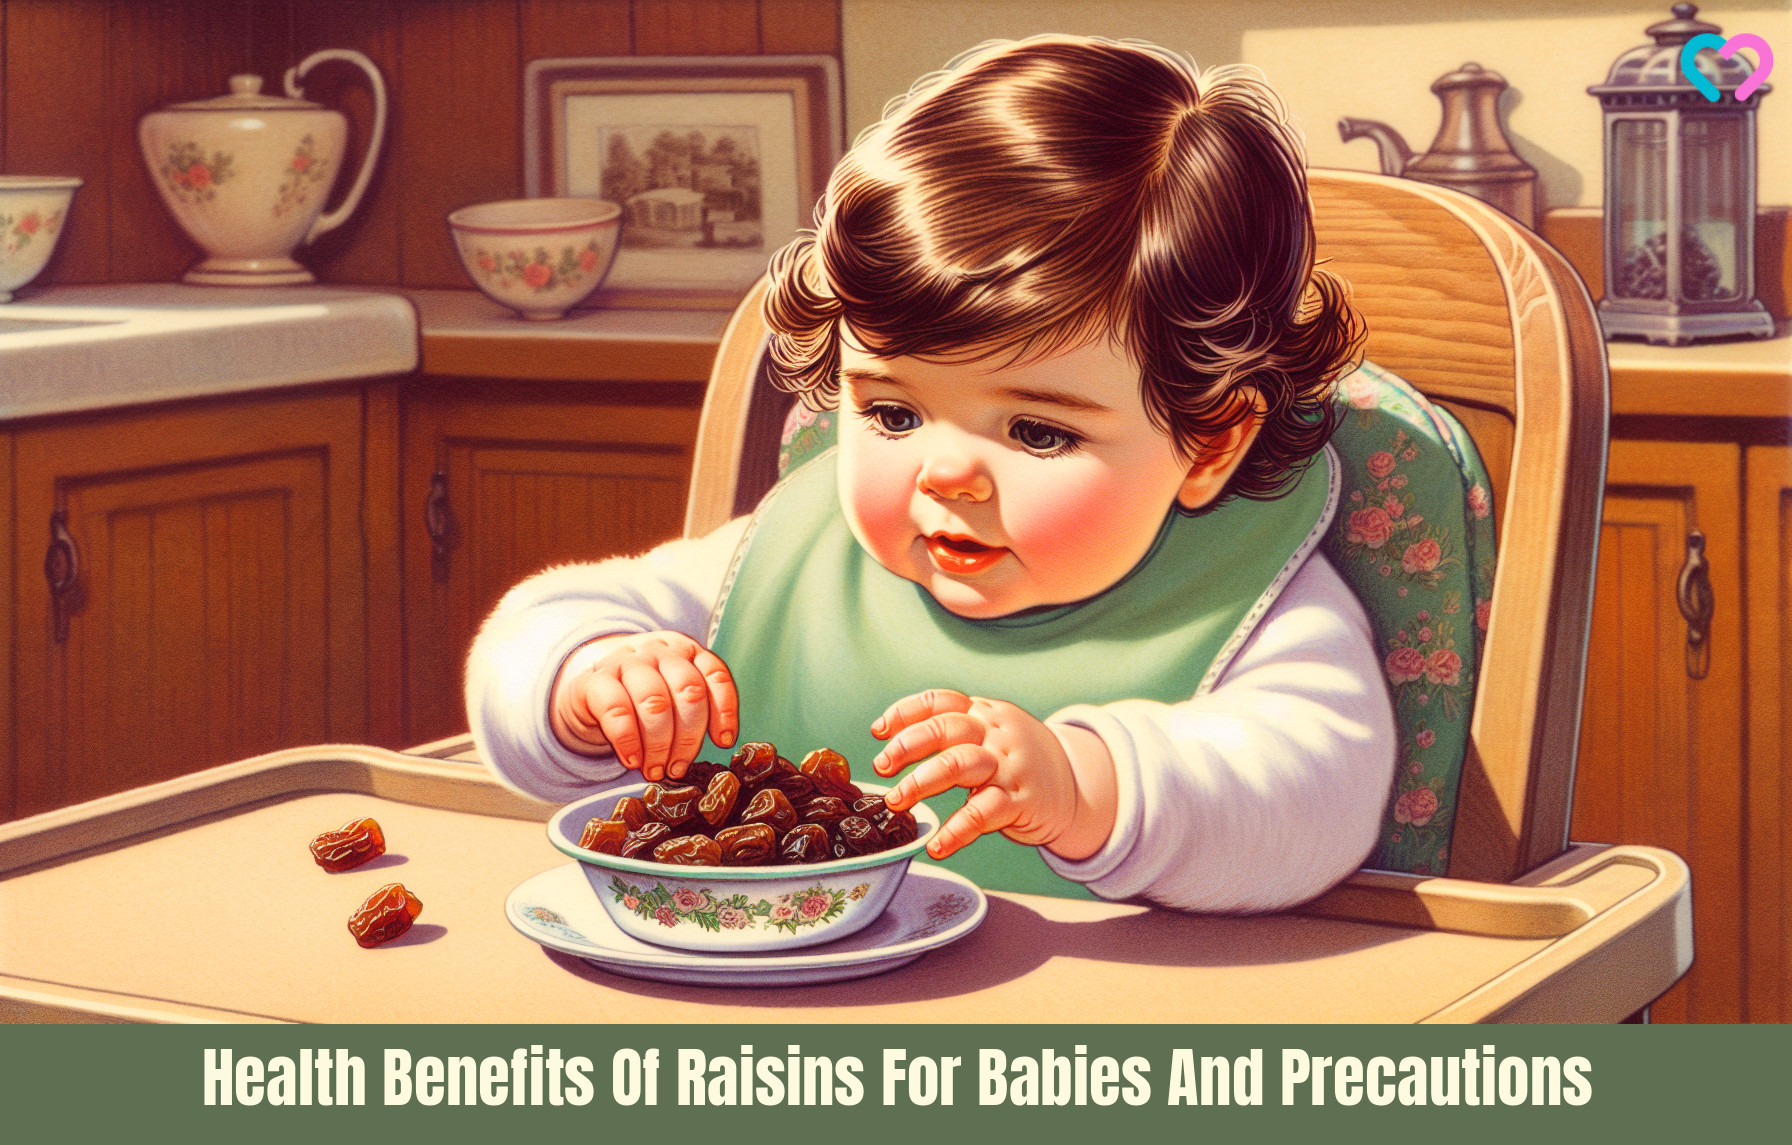 raisins for babies_illustration